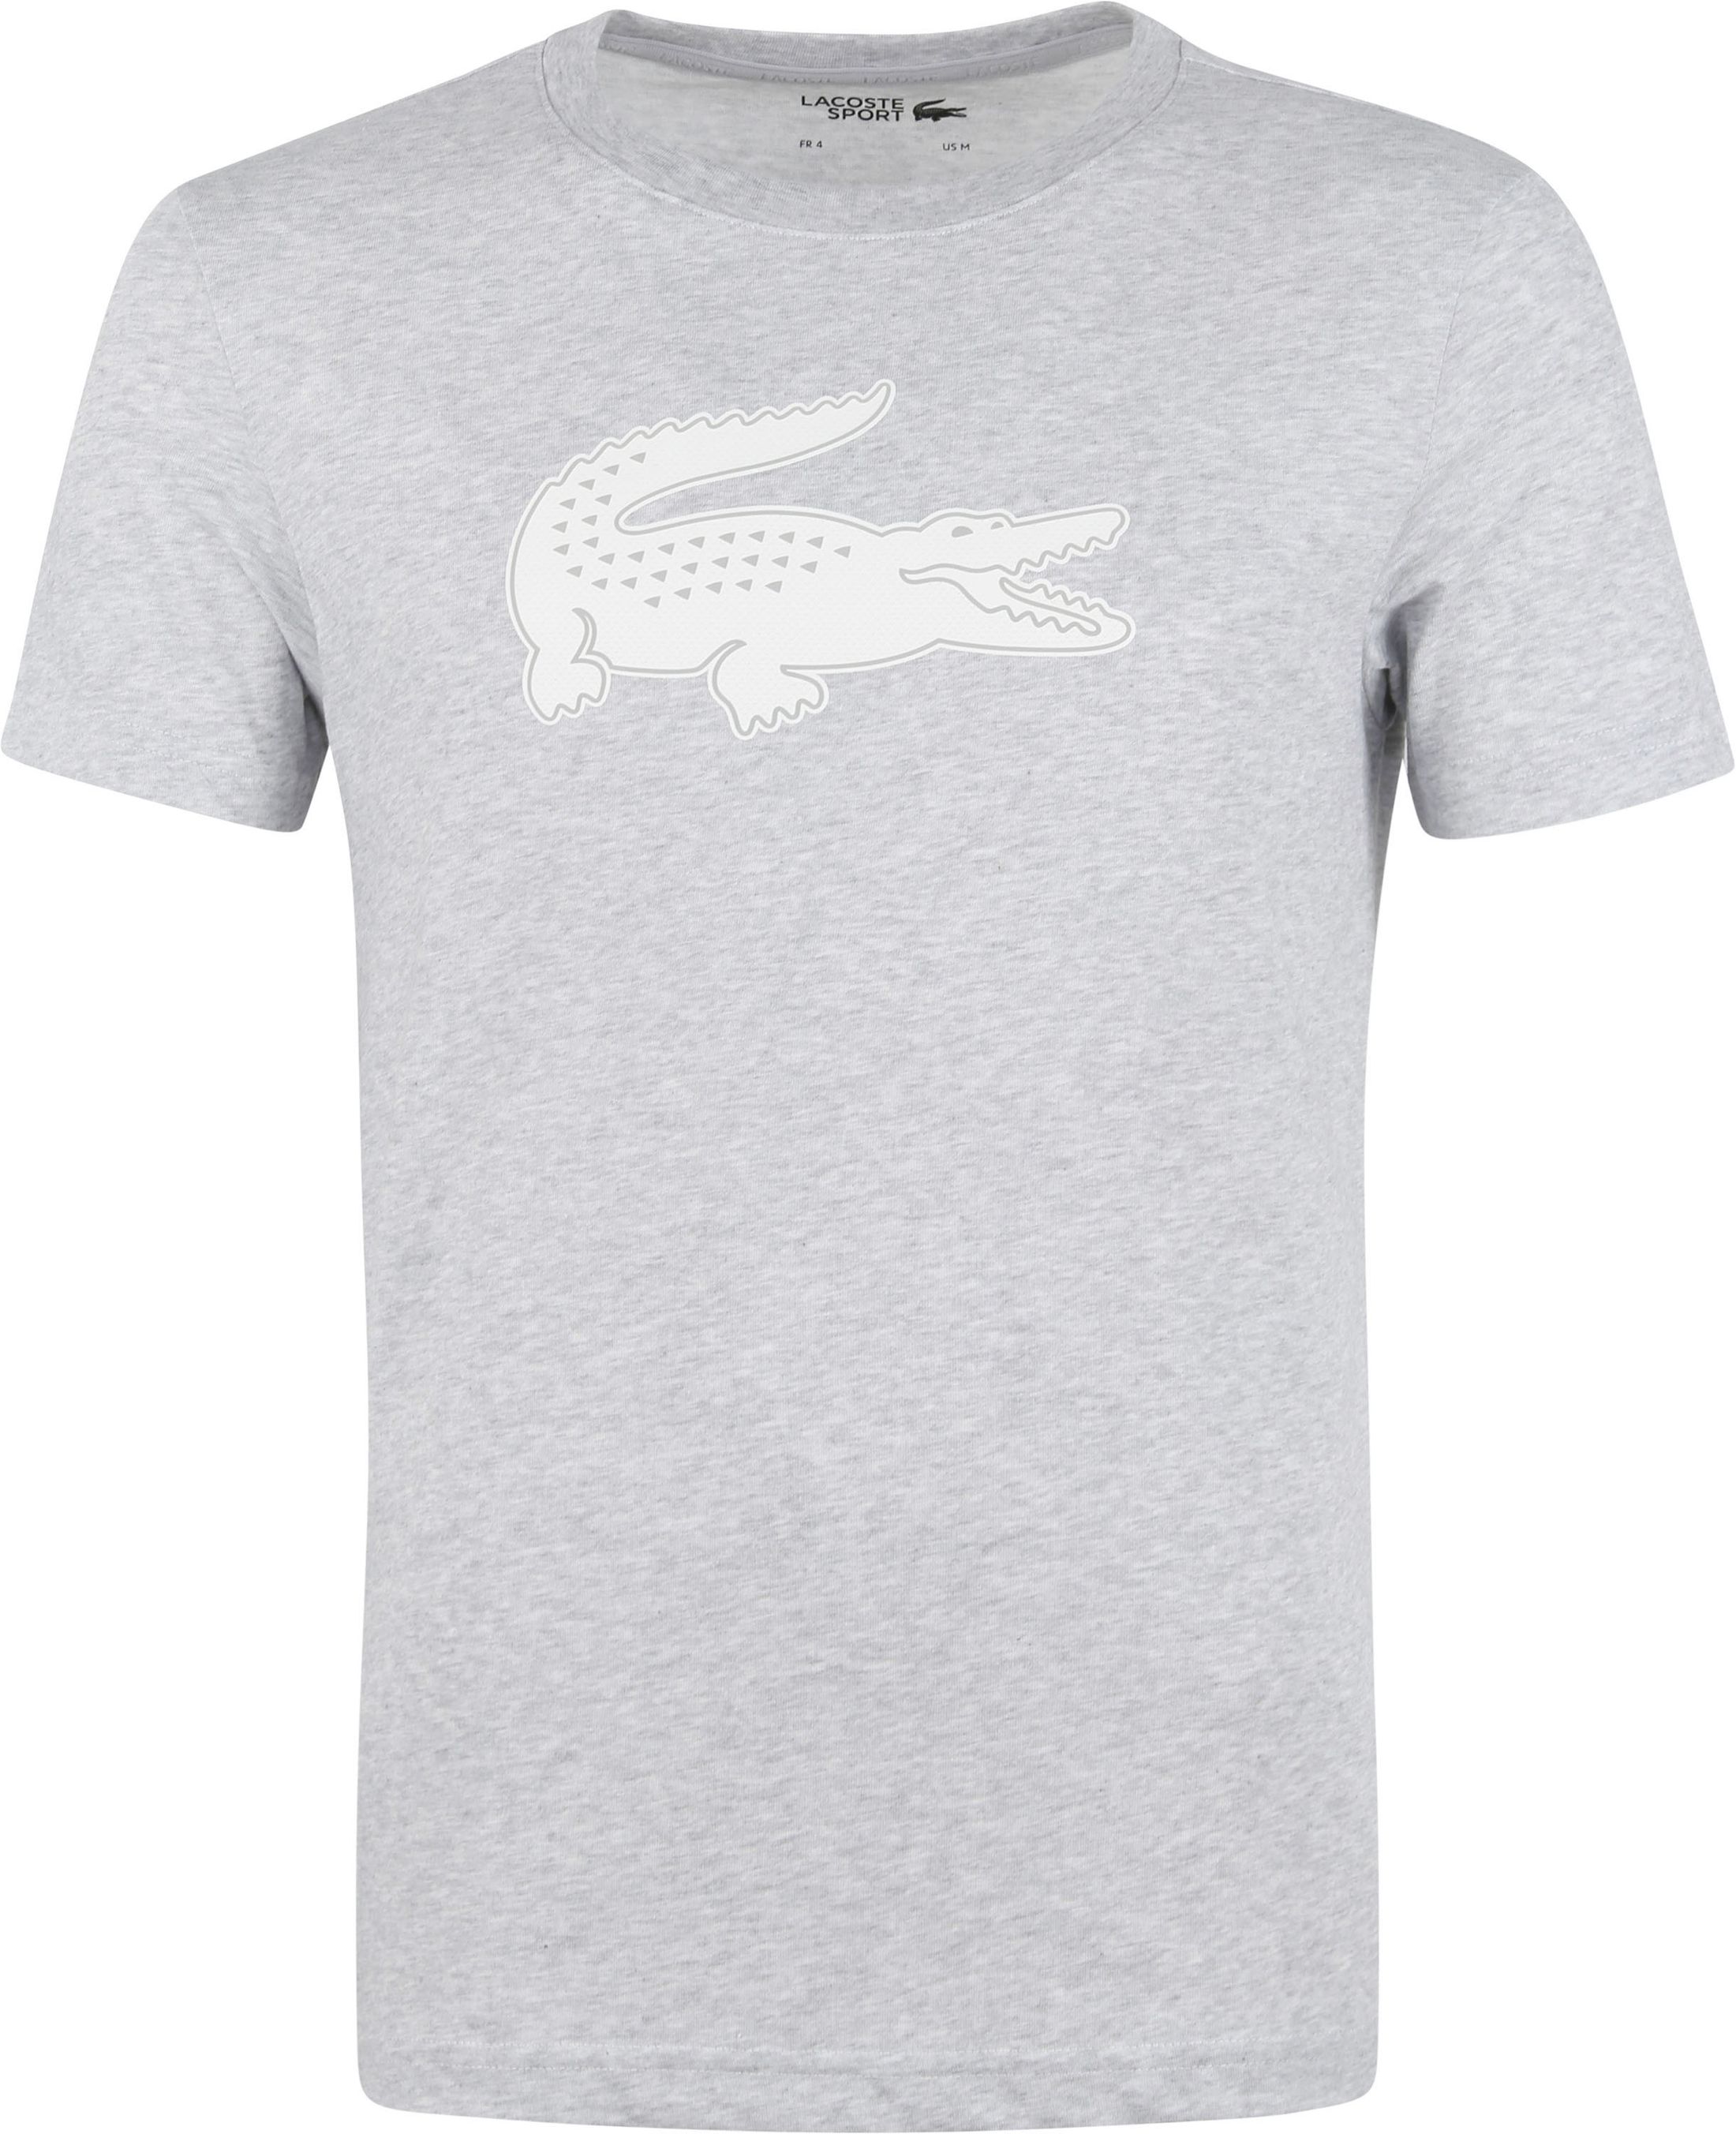 Lacoste Sport T-Shirt Jersey Light Grey size L